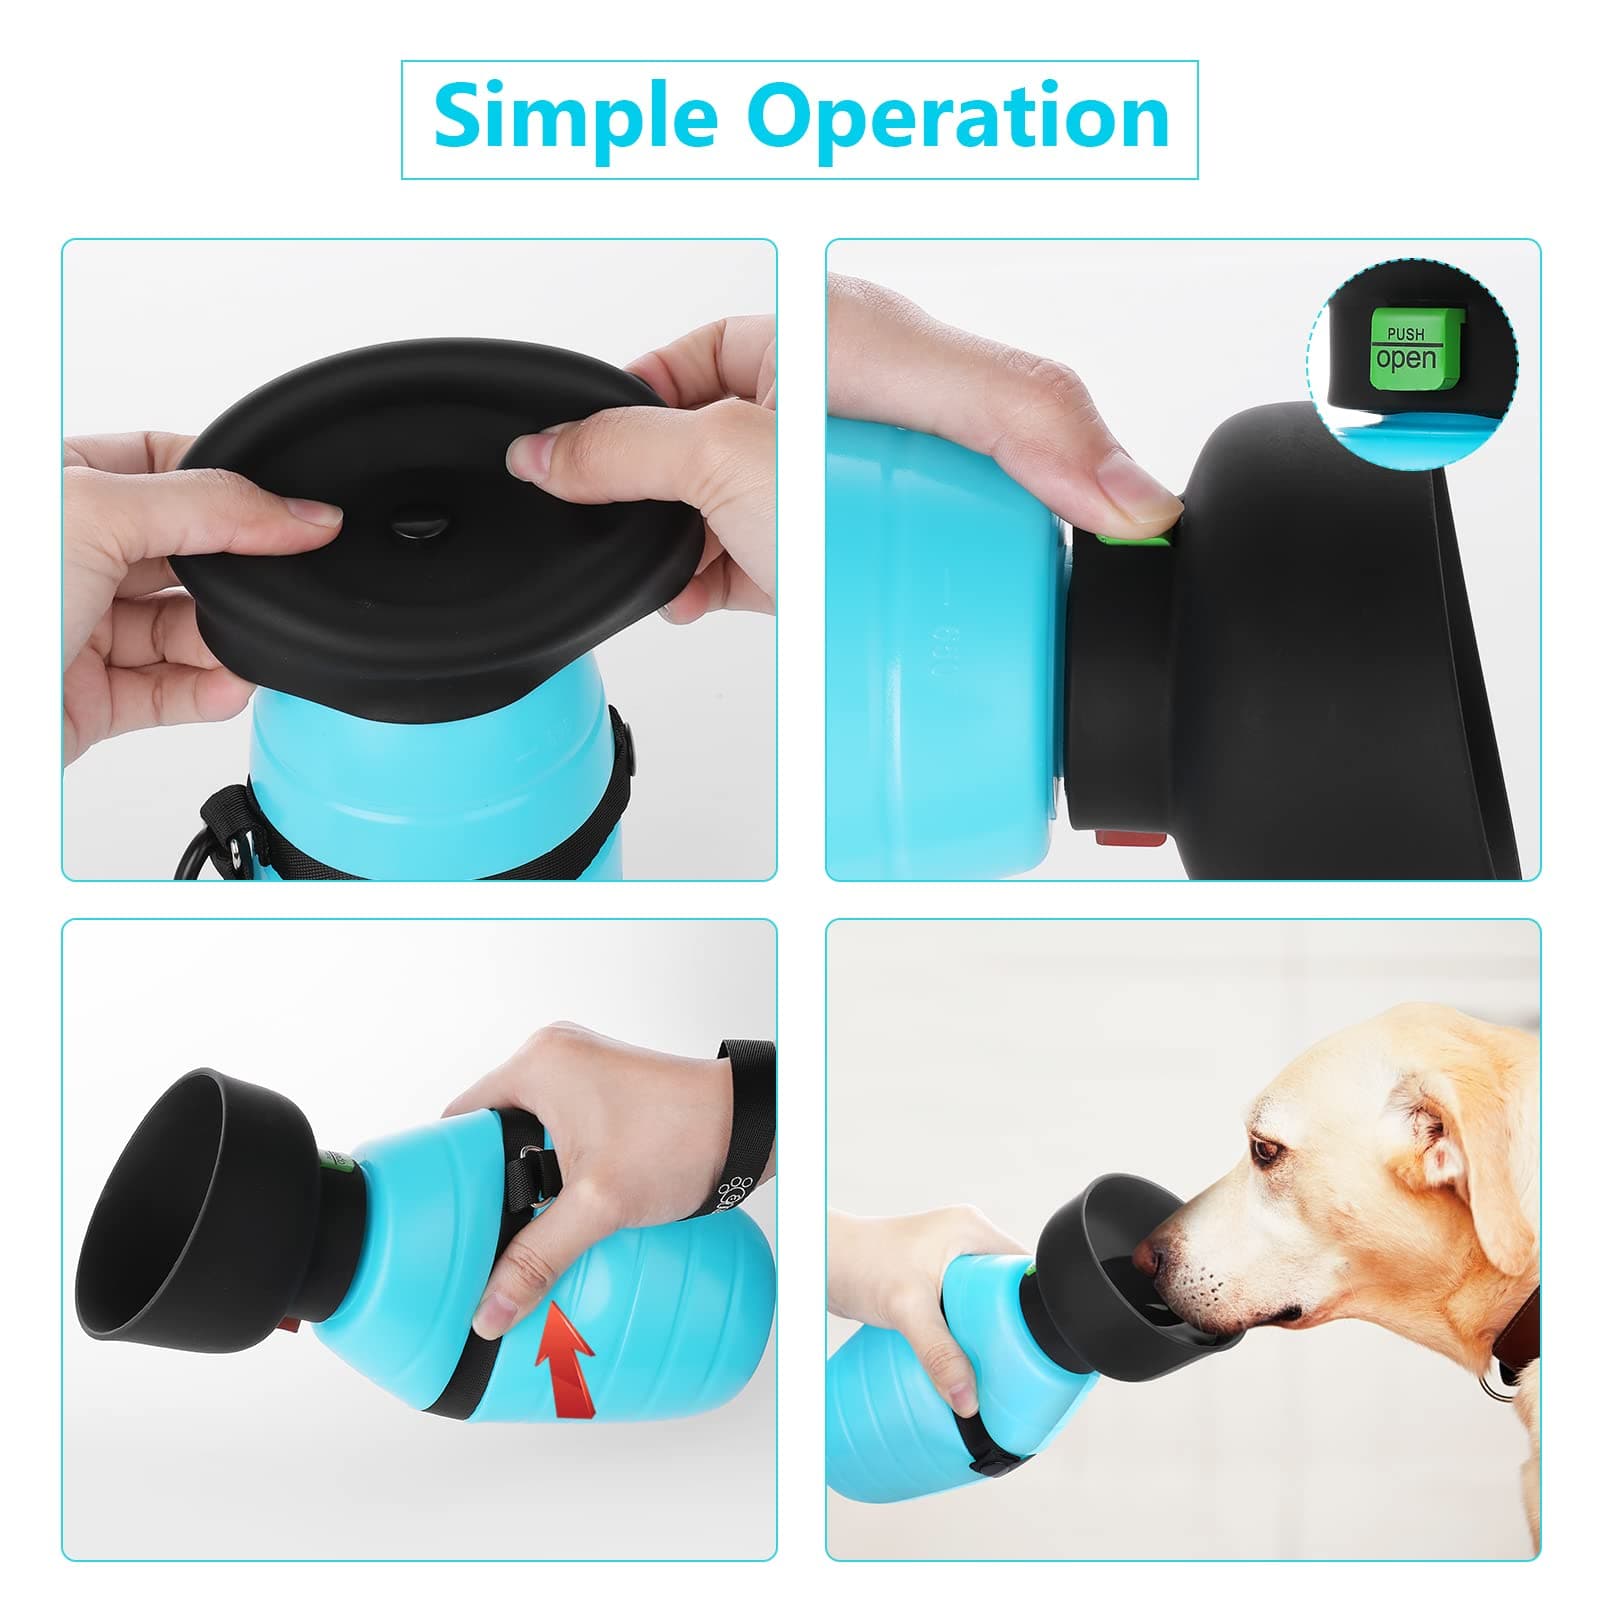 Pecute Dog Water Borraccia portatile (blu)